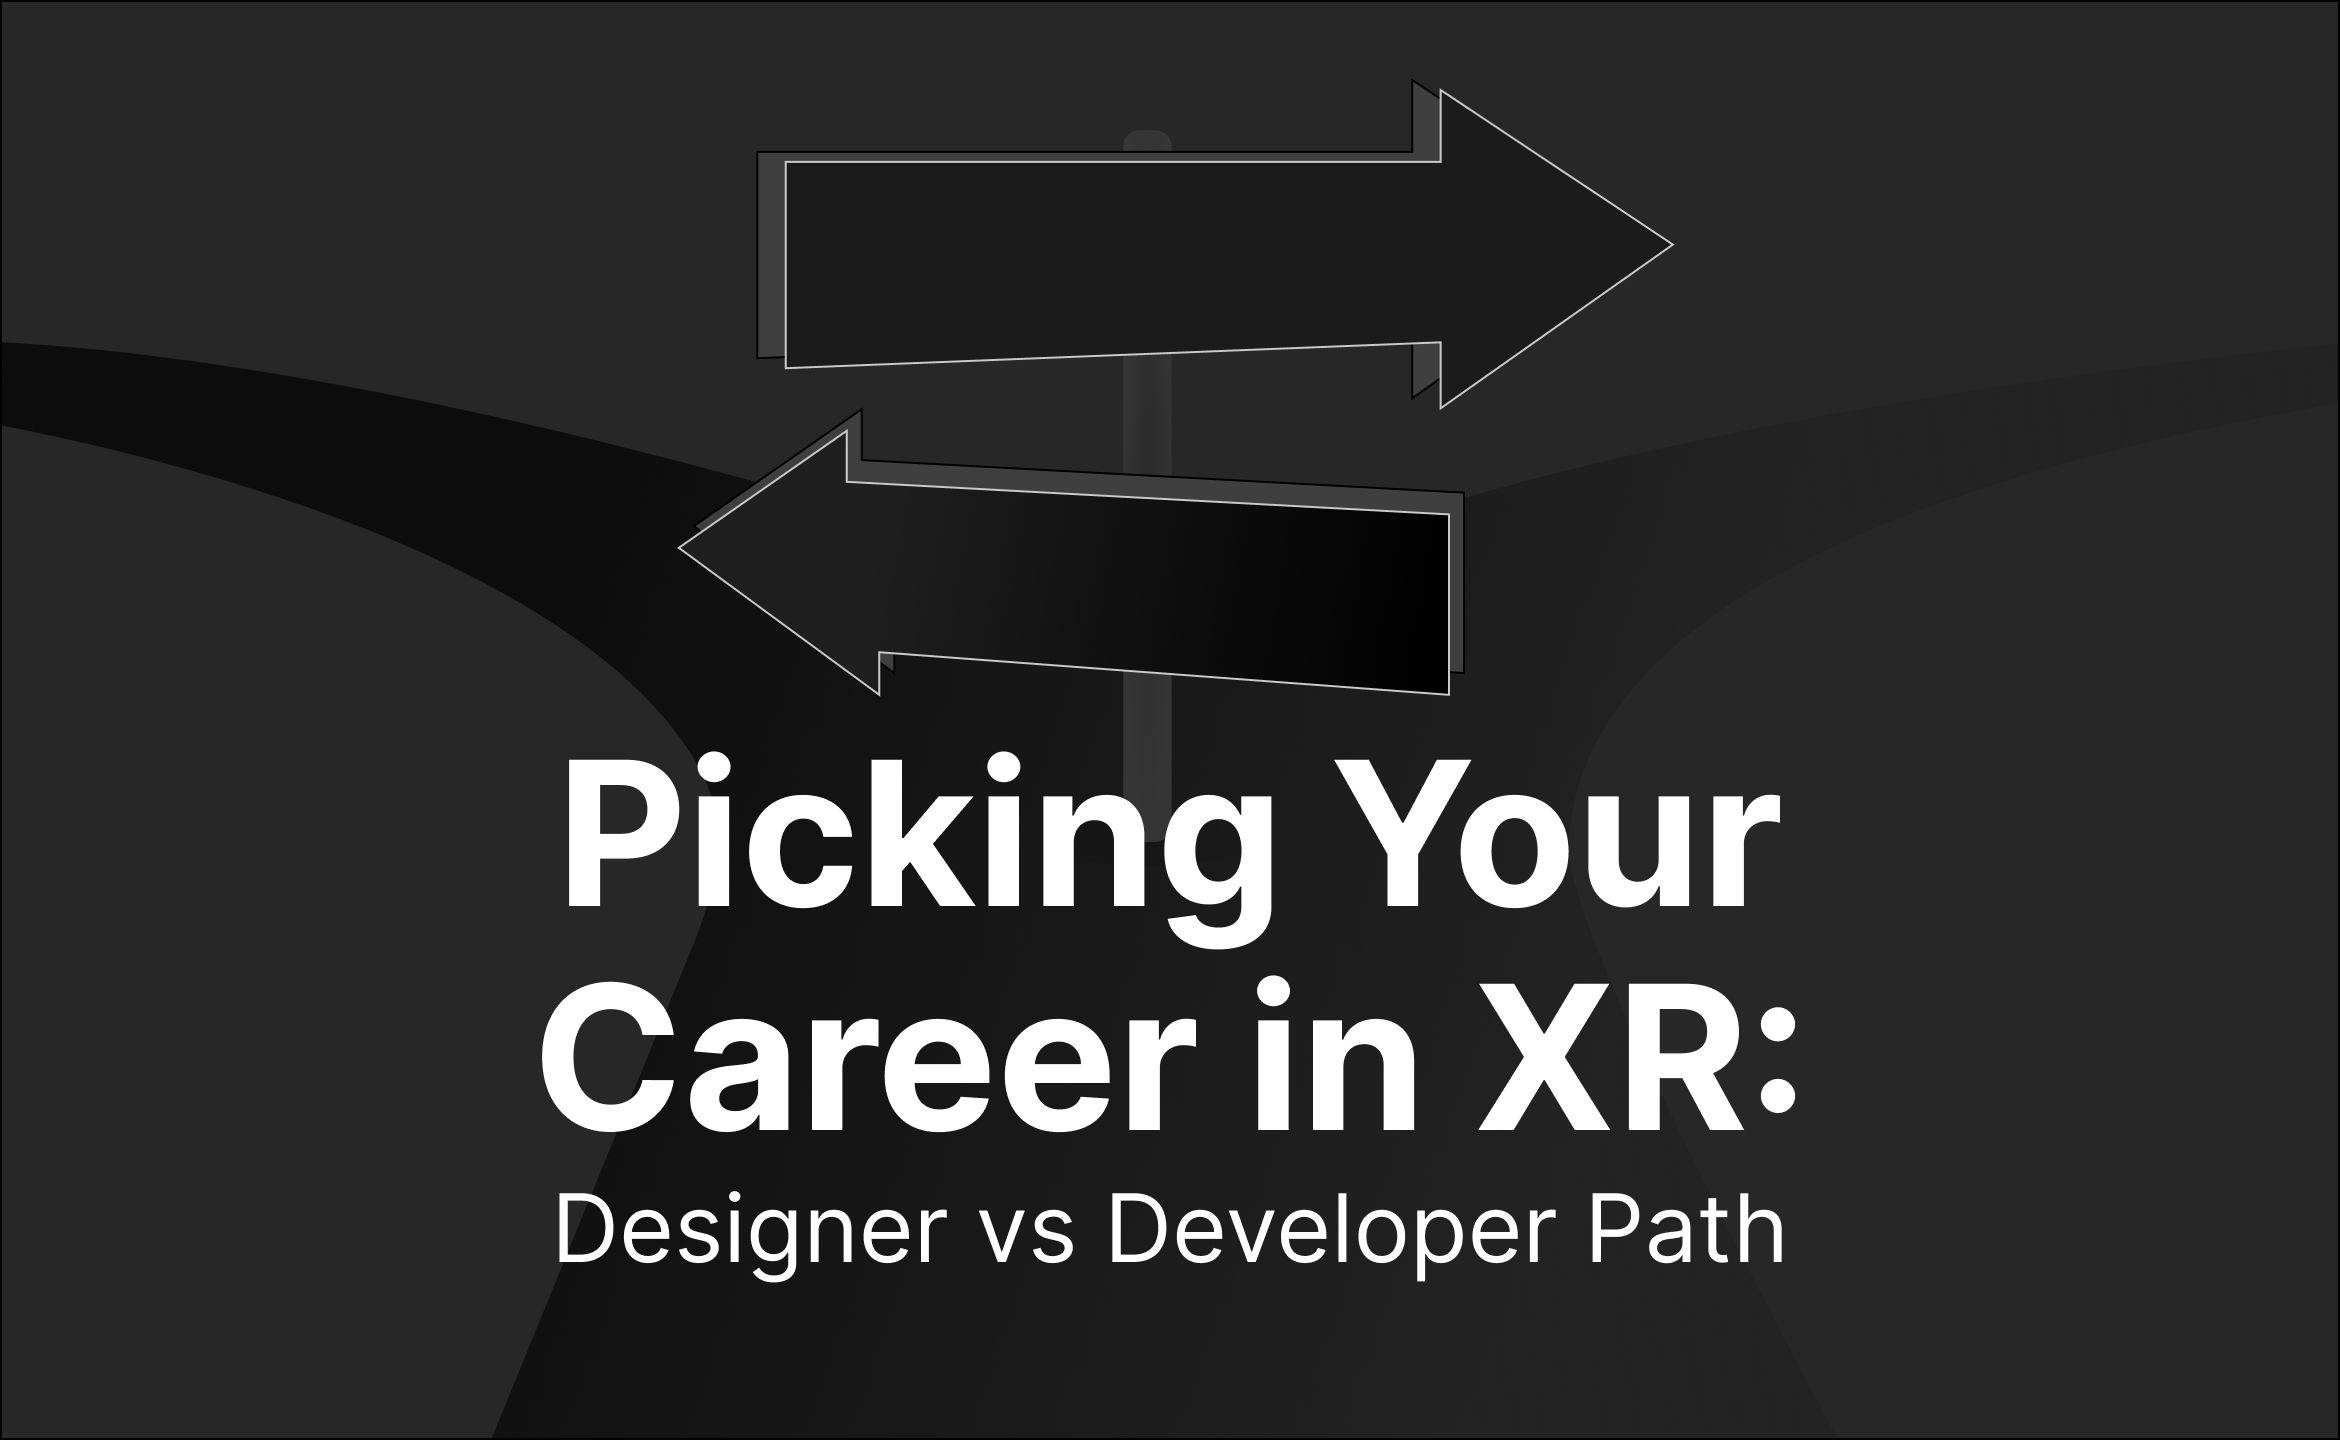 featured image - Using the XR Double Diamond Process to Compare the Designer vs Developer Path